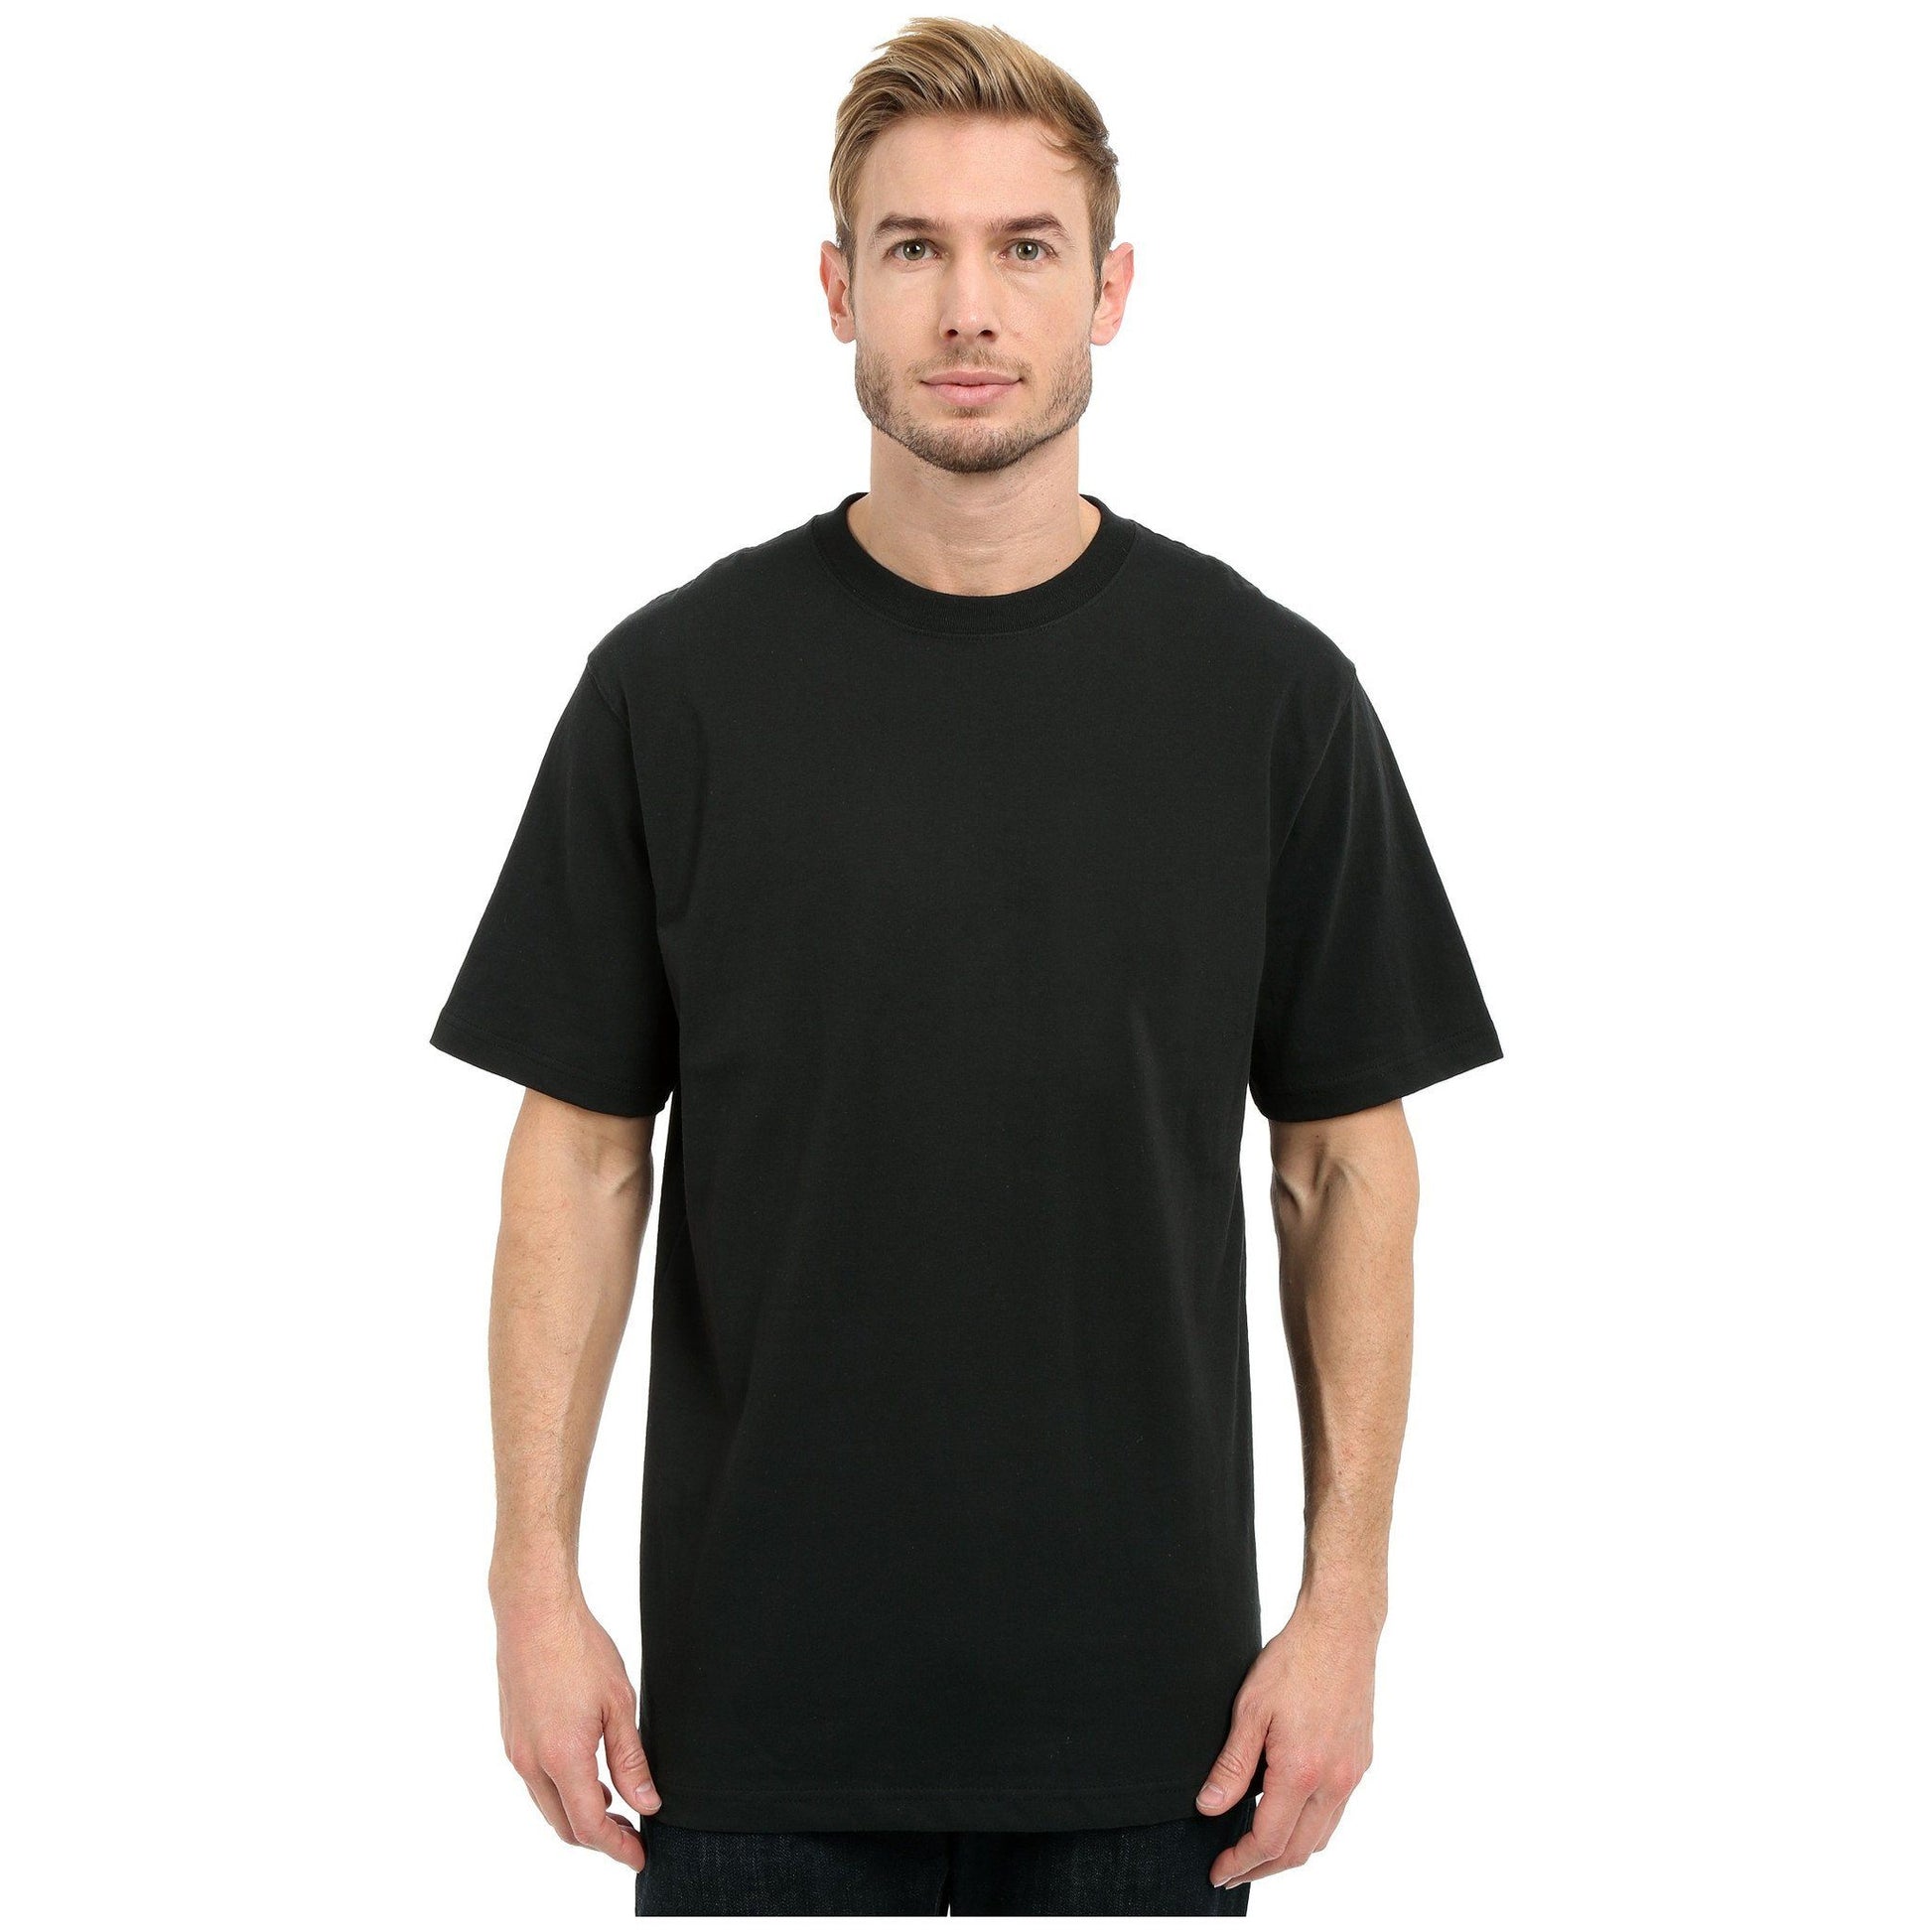 Jackson Solid Color Short Sleeve Tee Shirt Men's Tee Shirt Image 